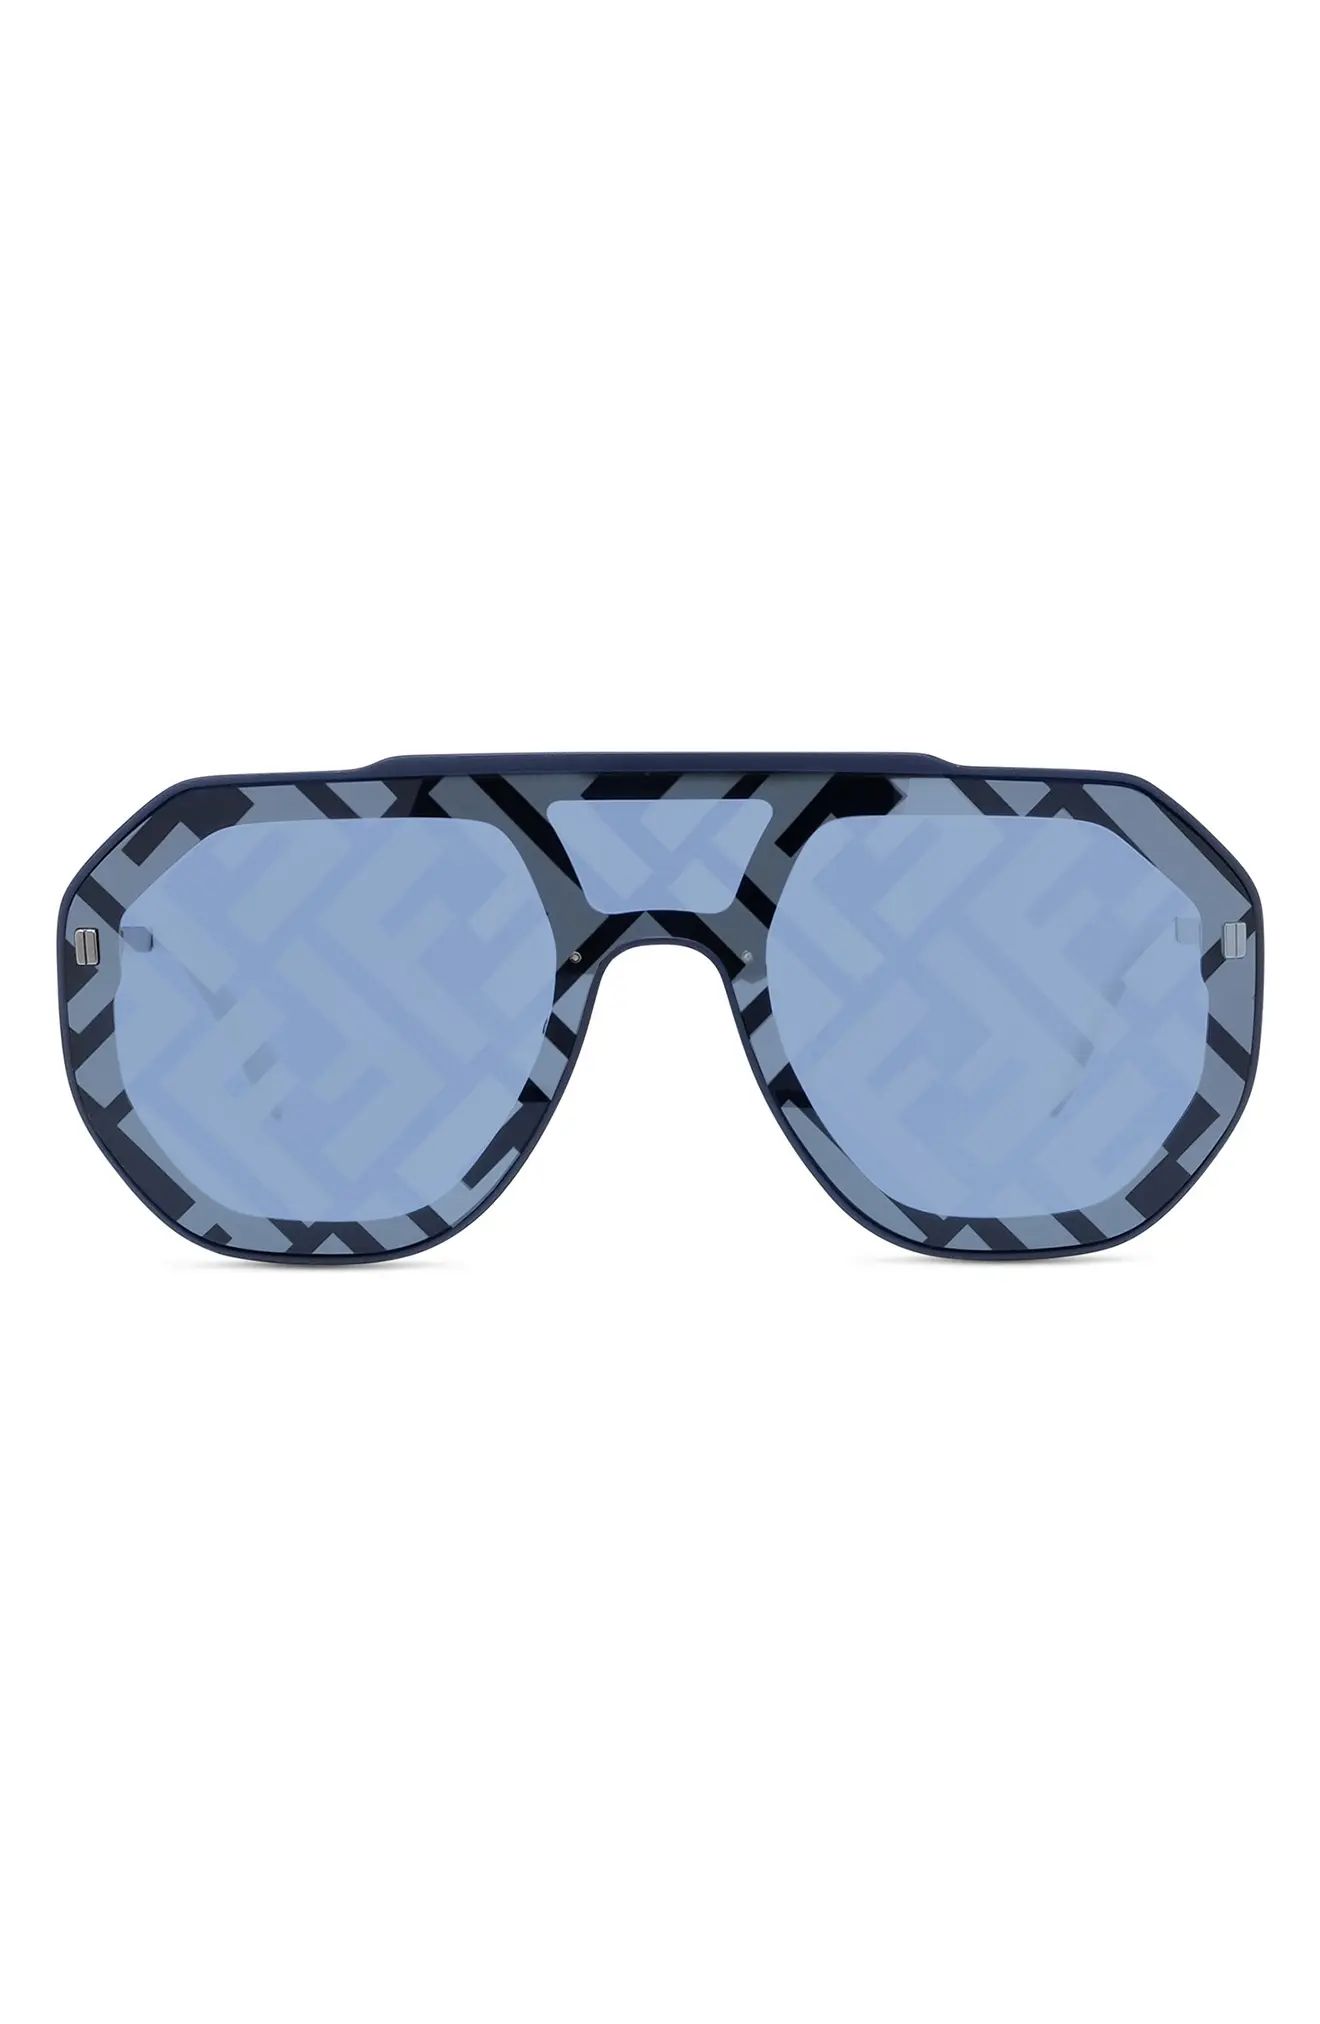 Fendi Evolution Aviator Sunglasses in Matte Dark Ruth /Blu Mirror at Nordstrom | Nordstrom